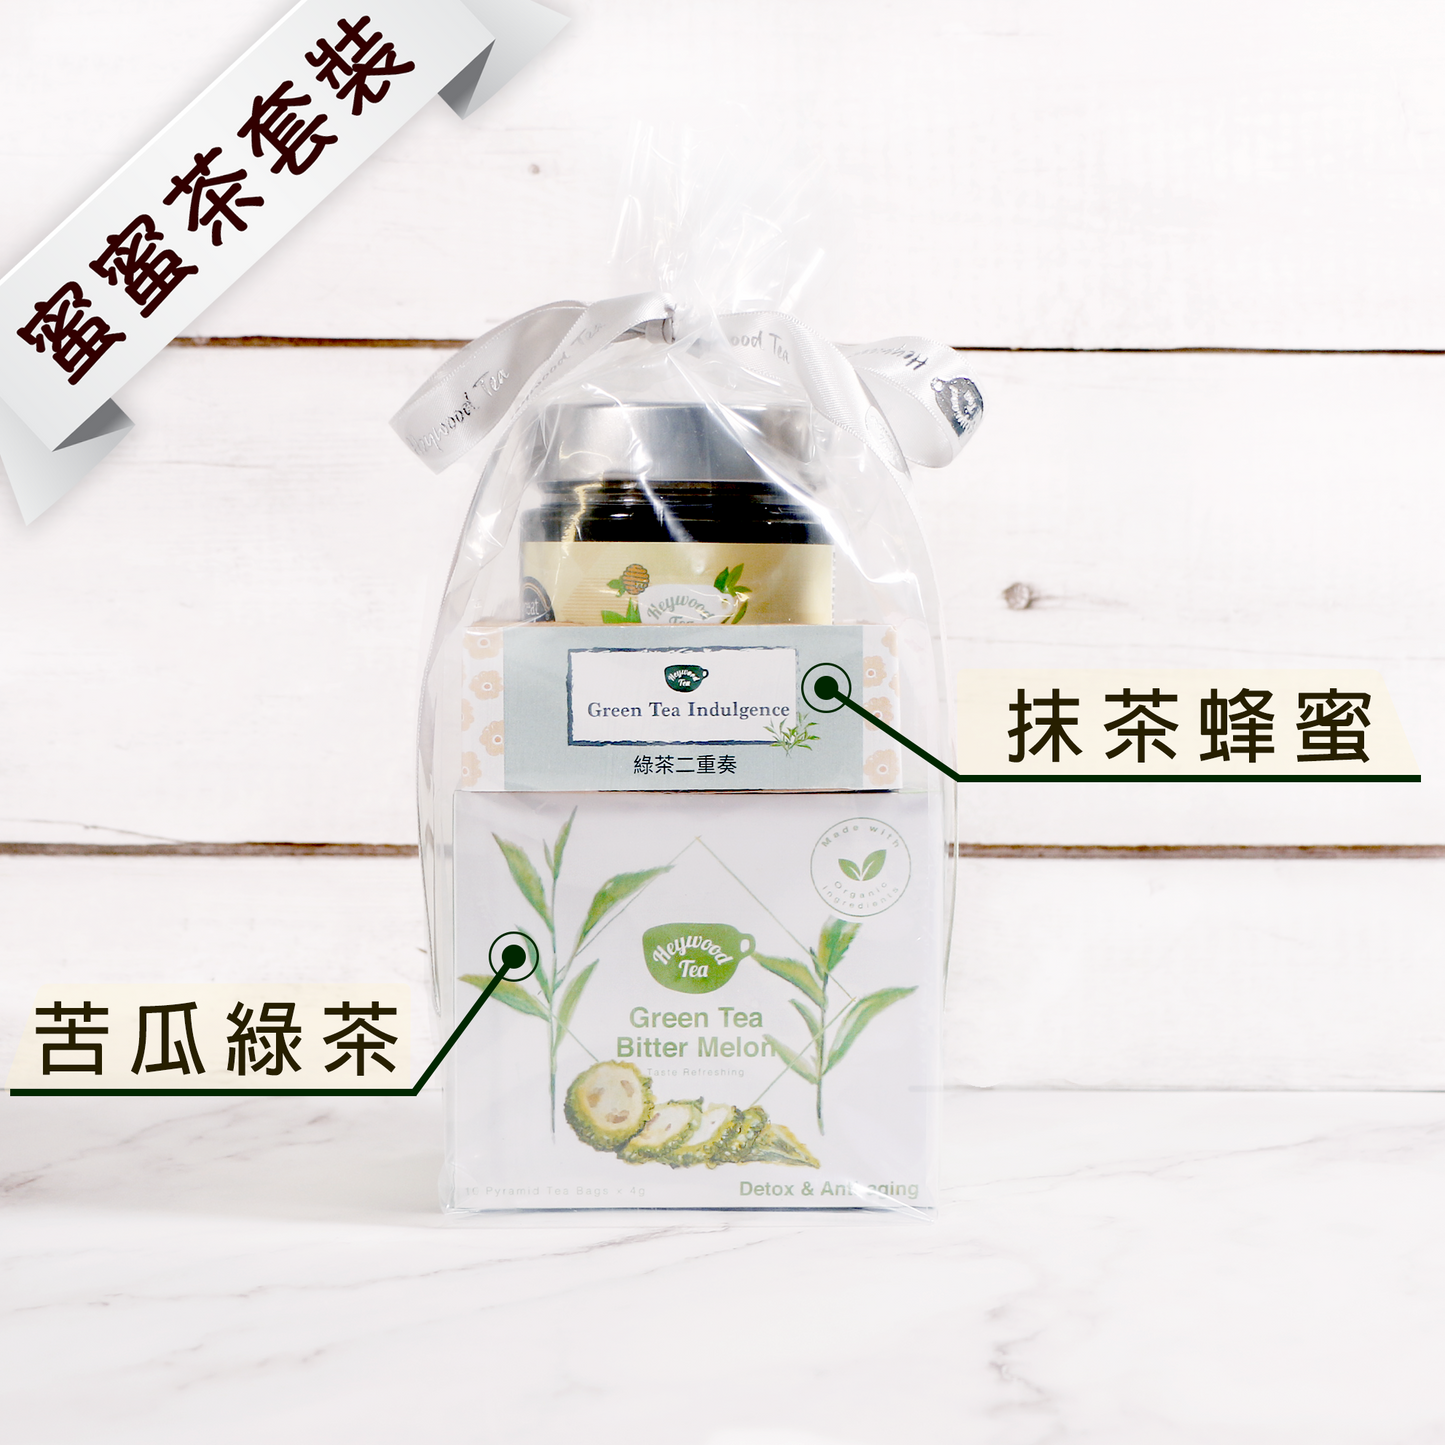 Heywood Tea Honey & Tea Set - Green Tea Indulgence 蜜蜜茶套裝 - 綠茶二重奏